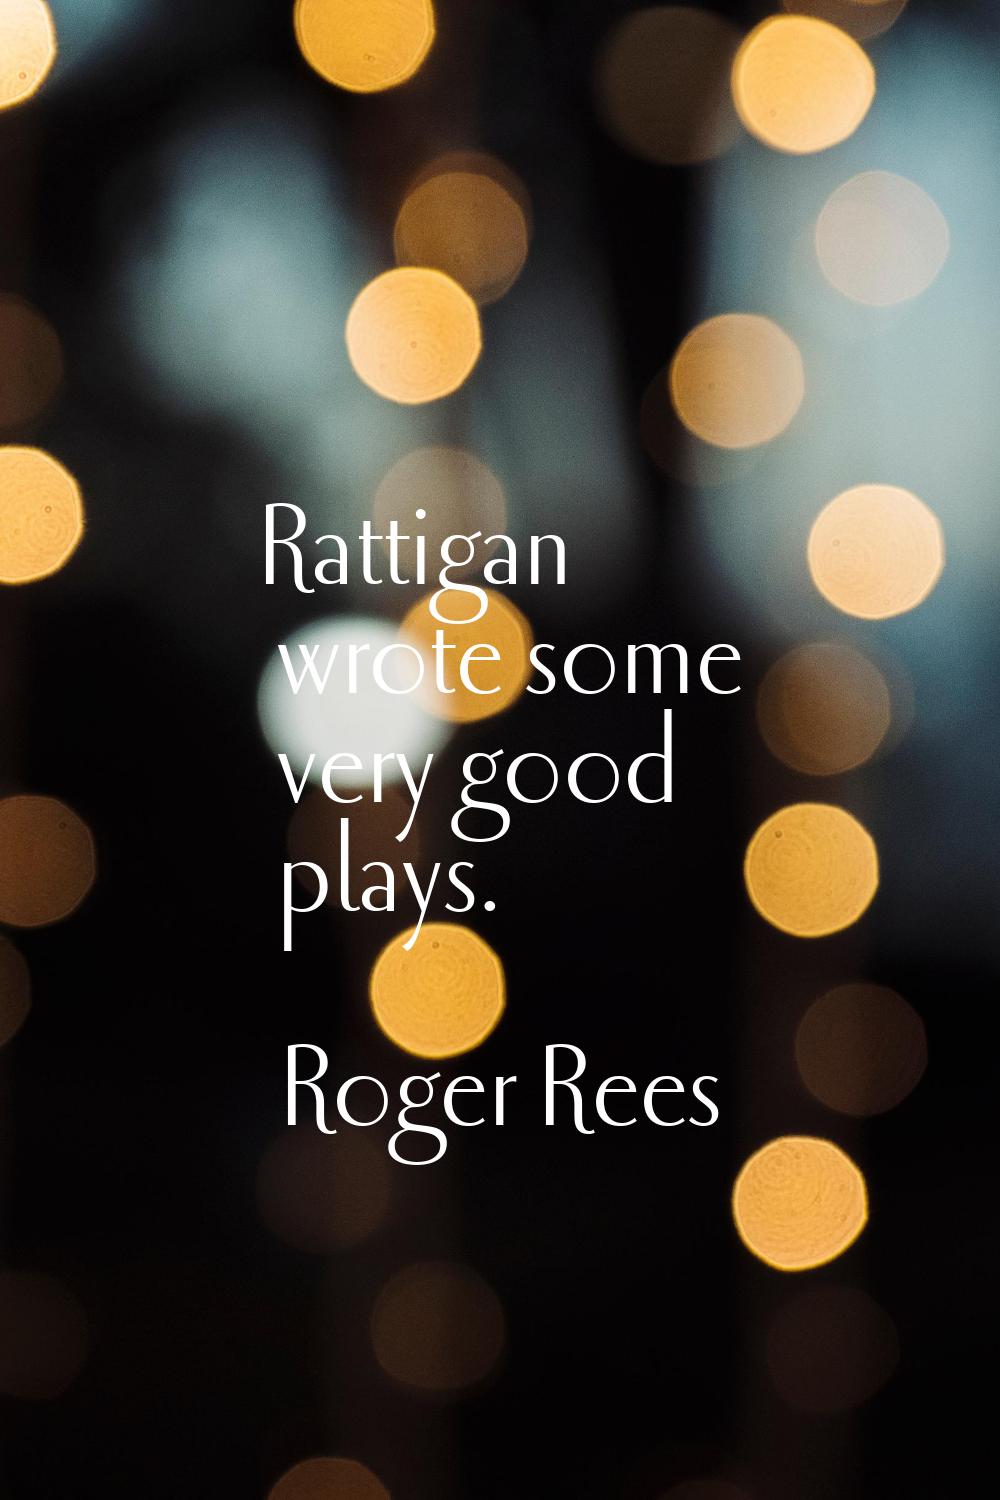 Rattigan wrote some very good plays.